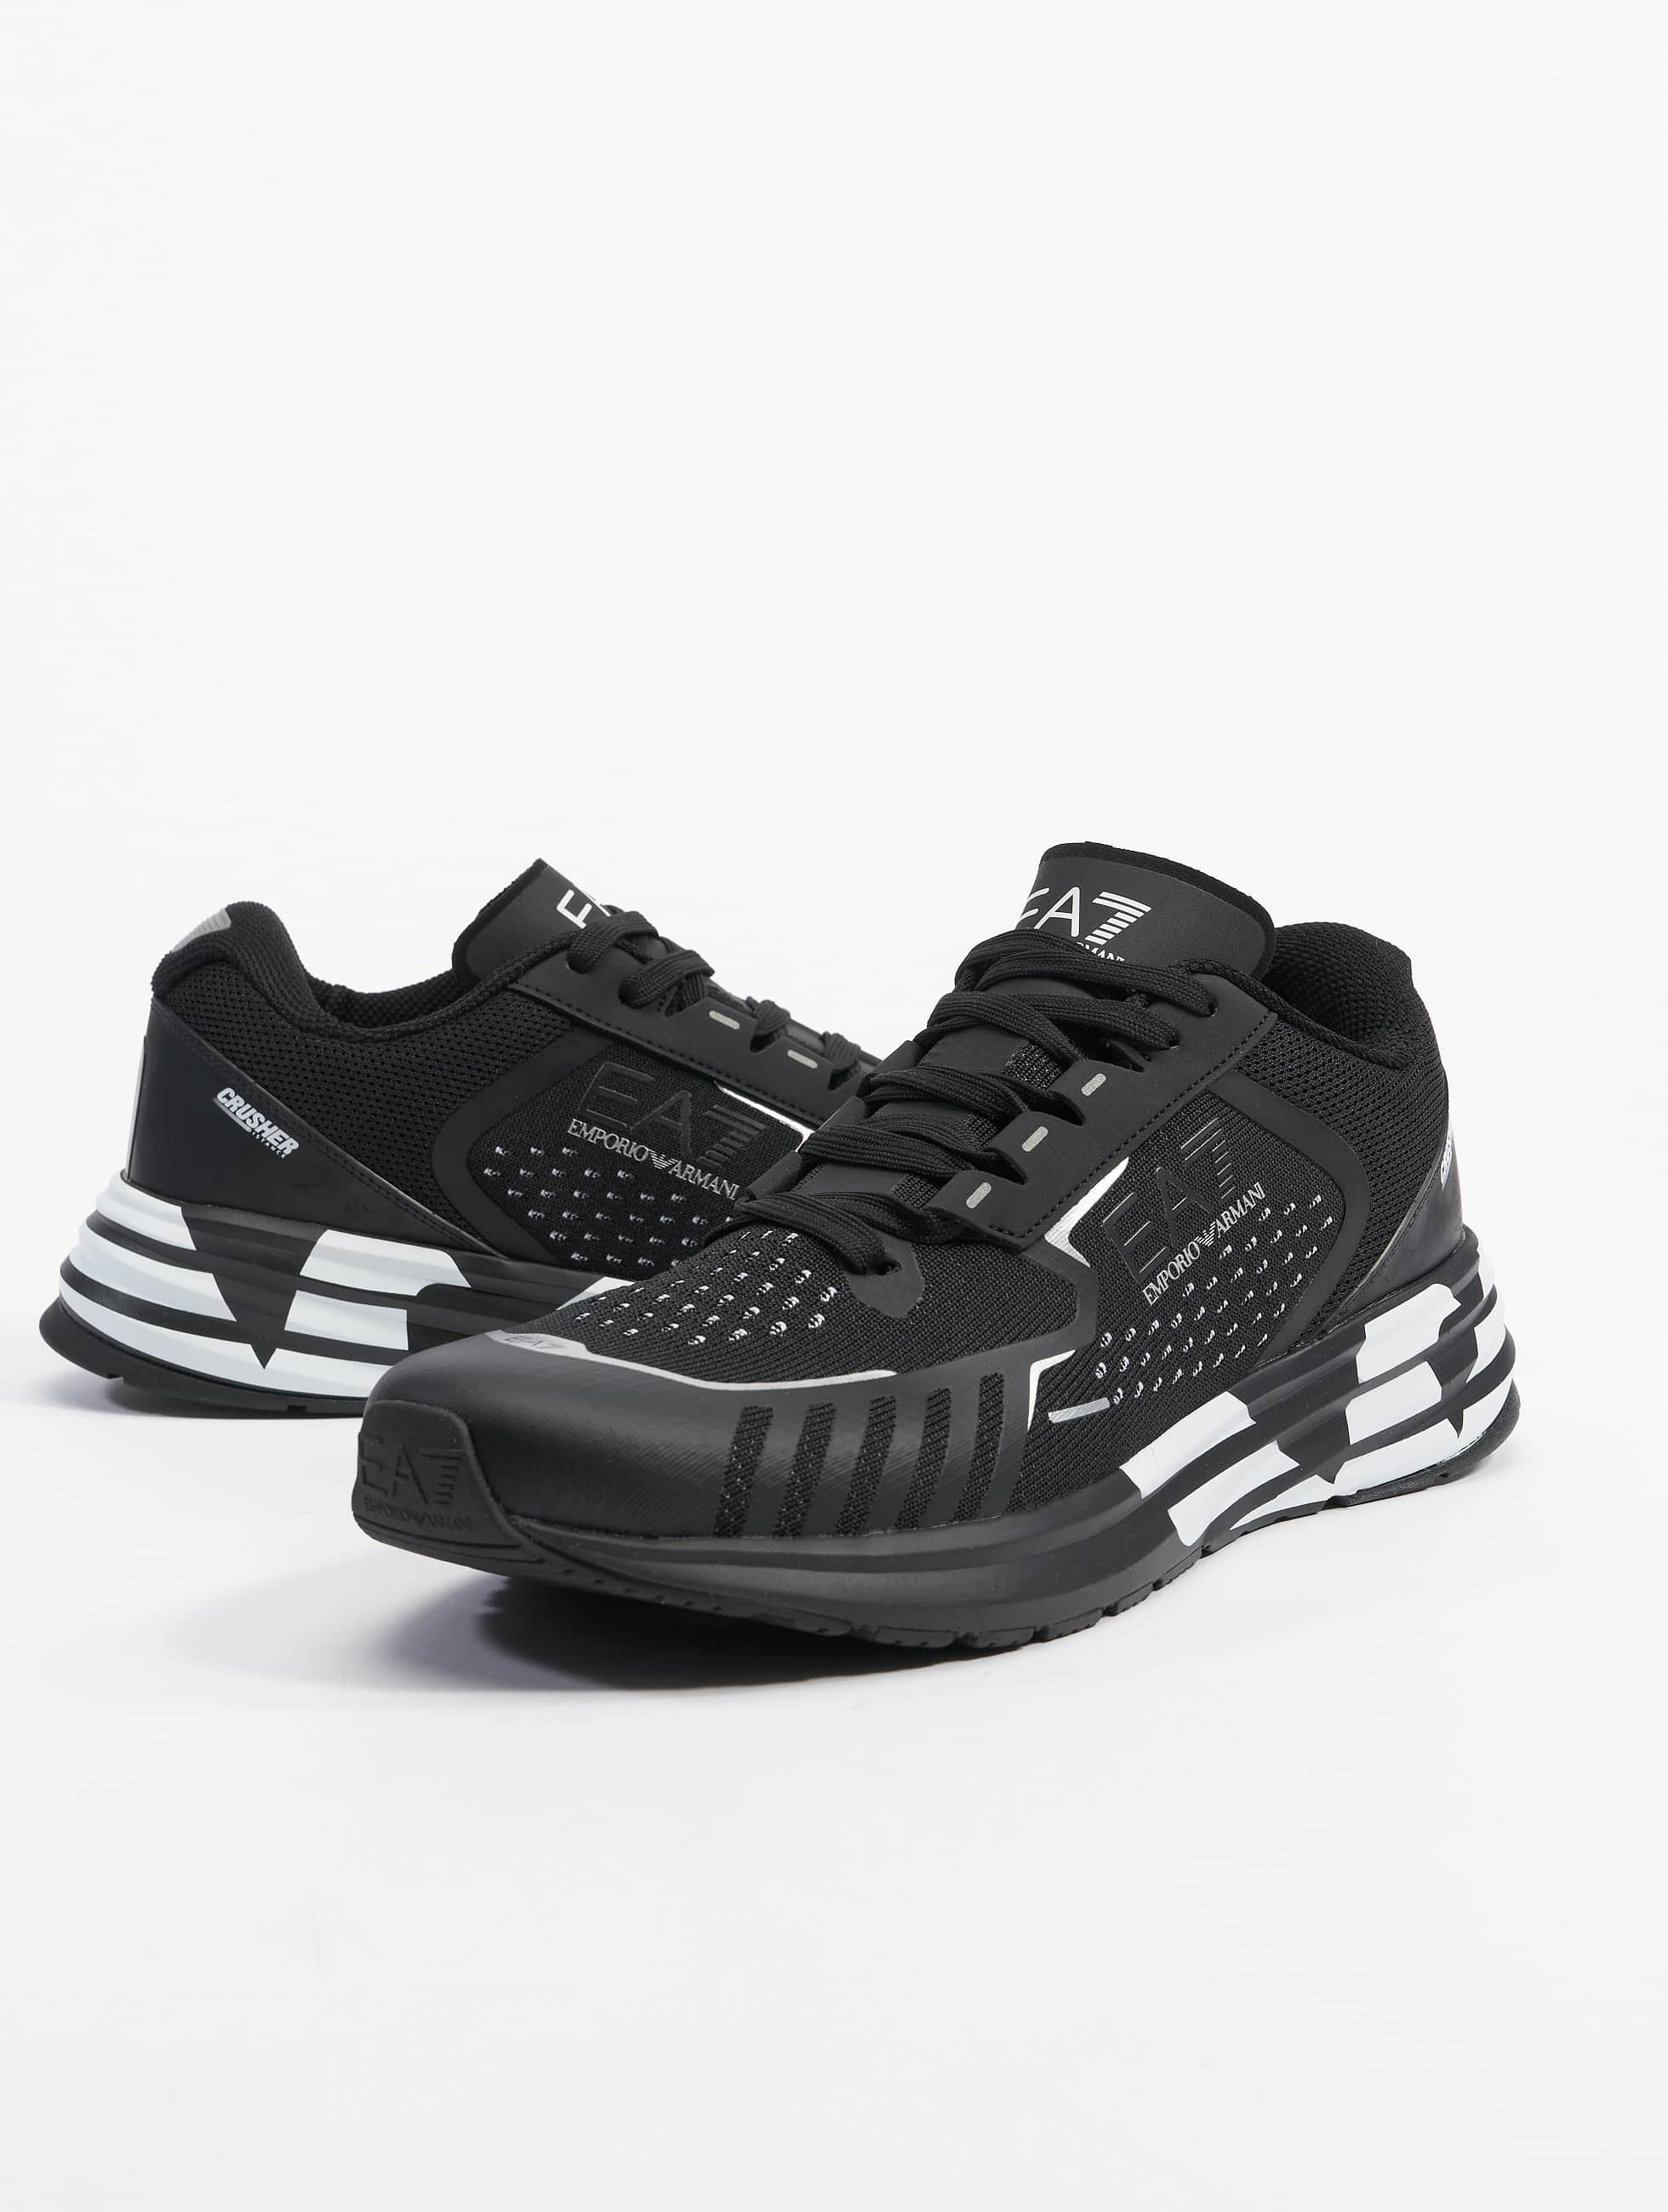 Armani Sko Sneakers Crusher Distance Reflex sort 904018